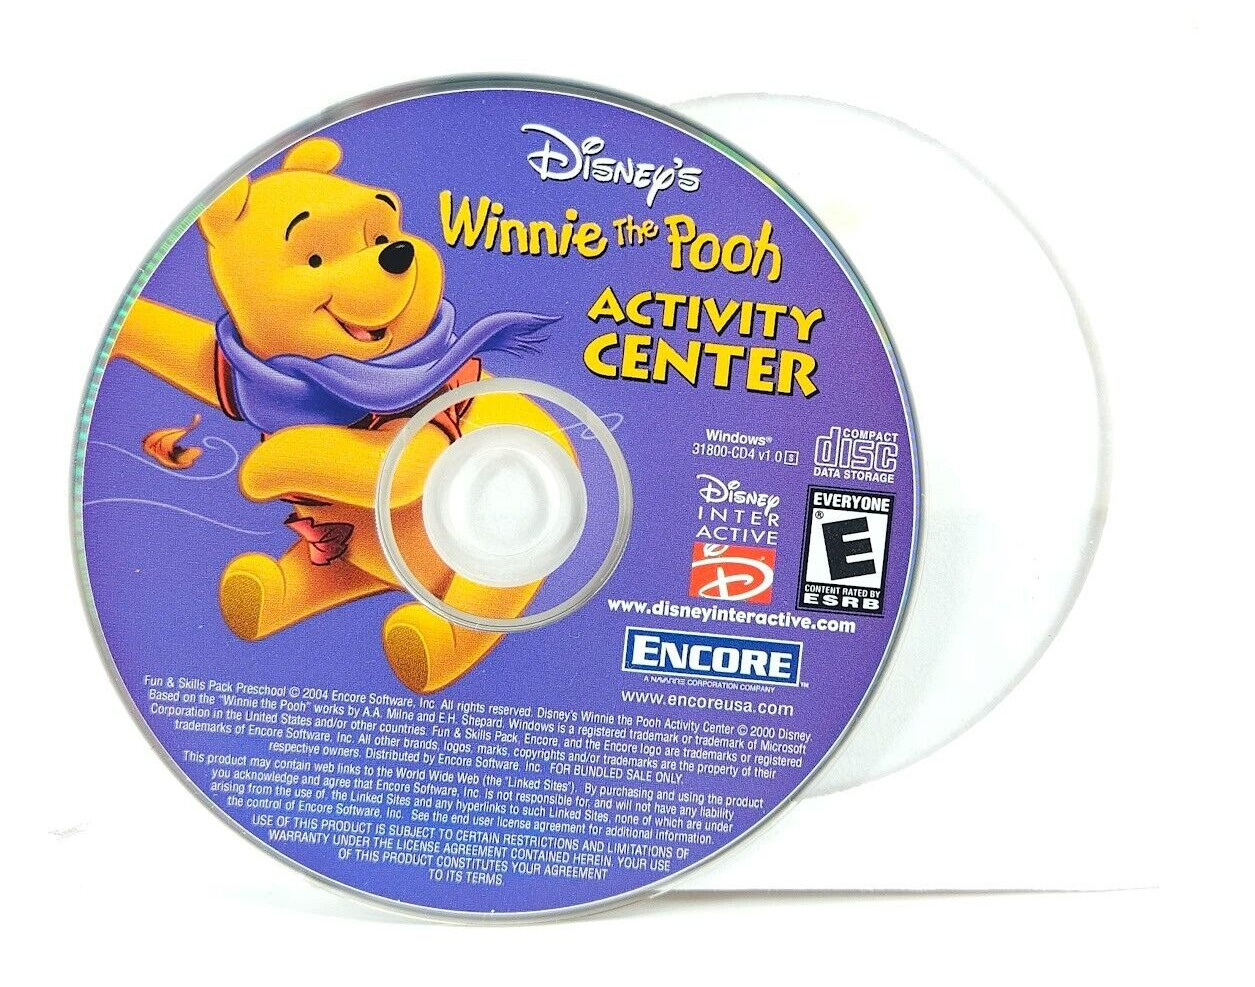 Disney's Winnie The Pooh Activity Center CD 2004 Fun & Skills Pack Preschool